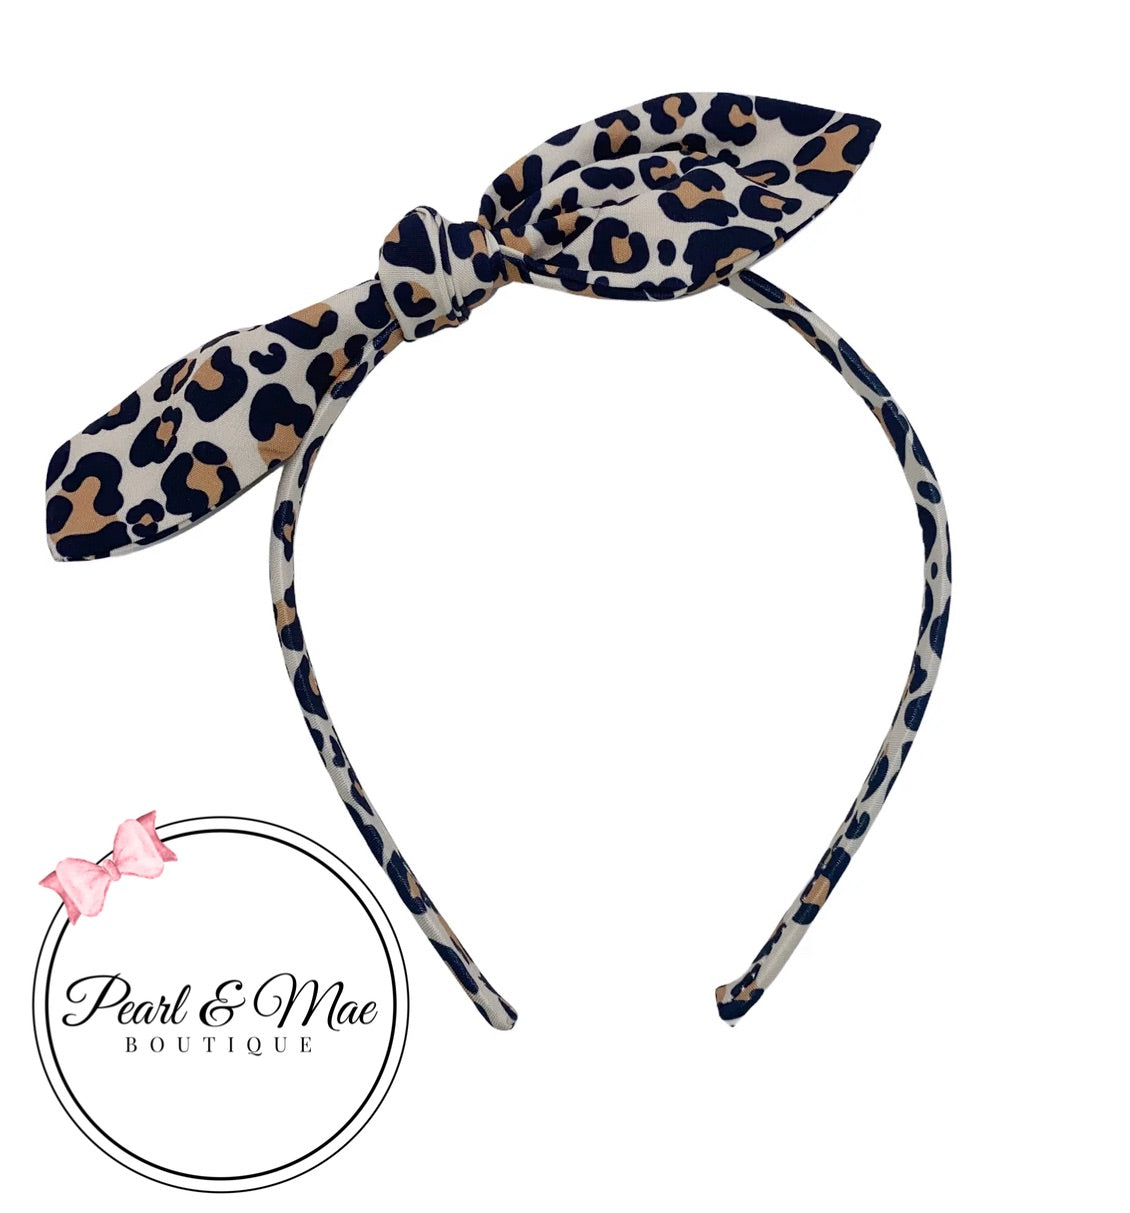 Leopard print knotted headbands